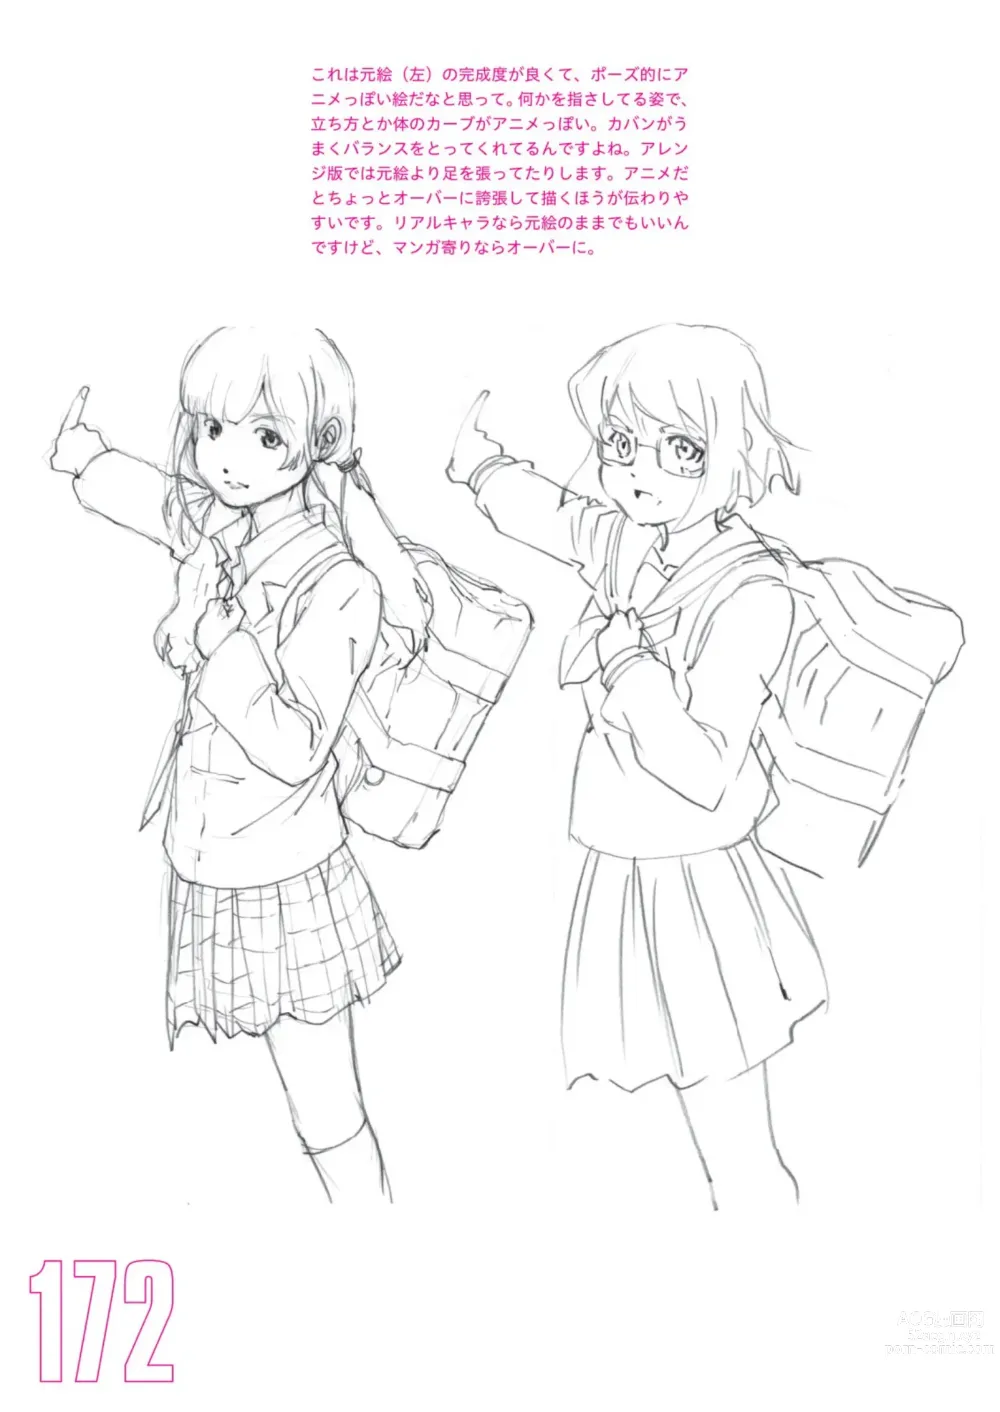 Page 154 of manga Toru Yoshida Tips for drawing women in 10 minutes 270 Uniforms